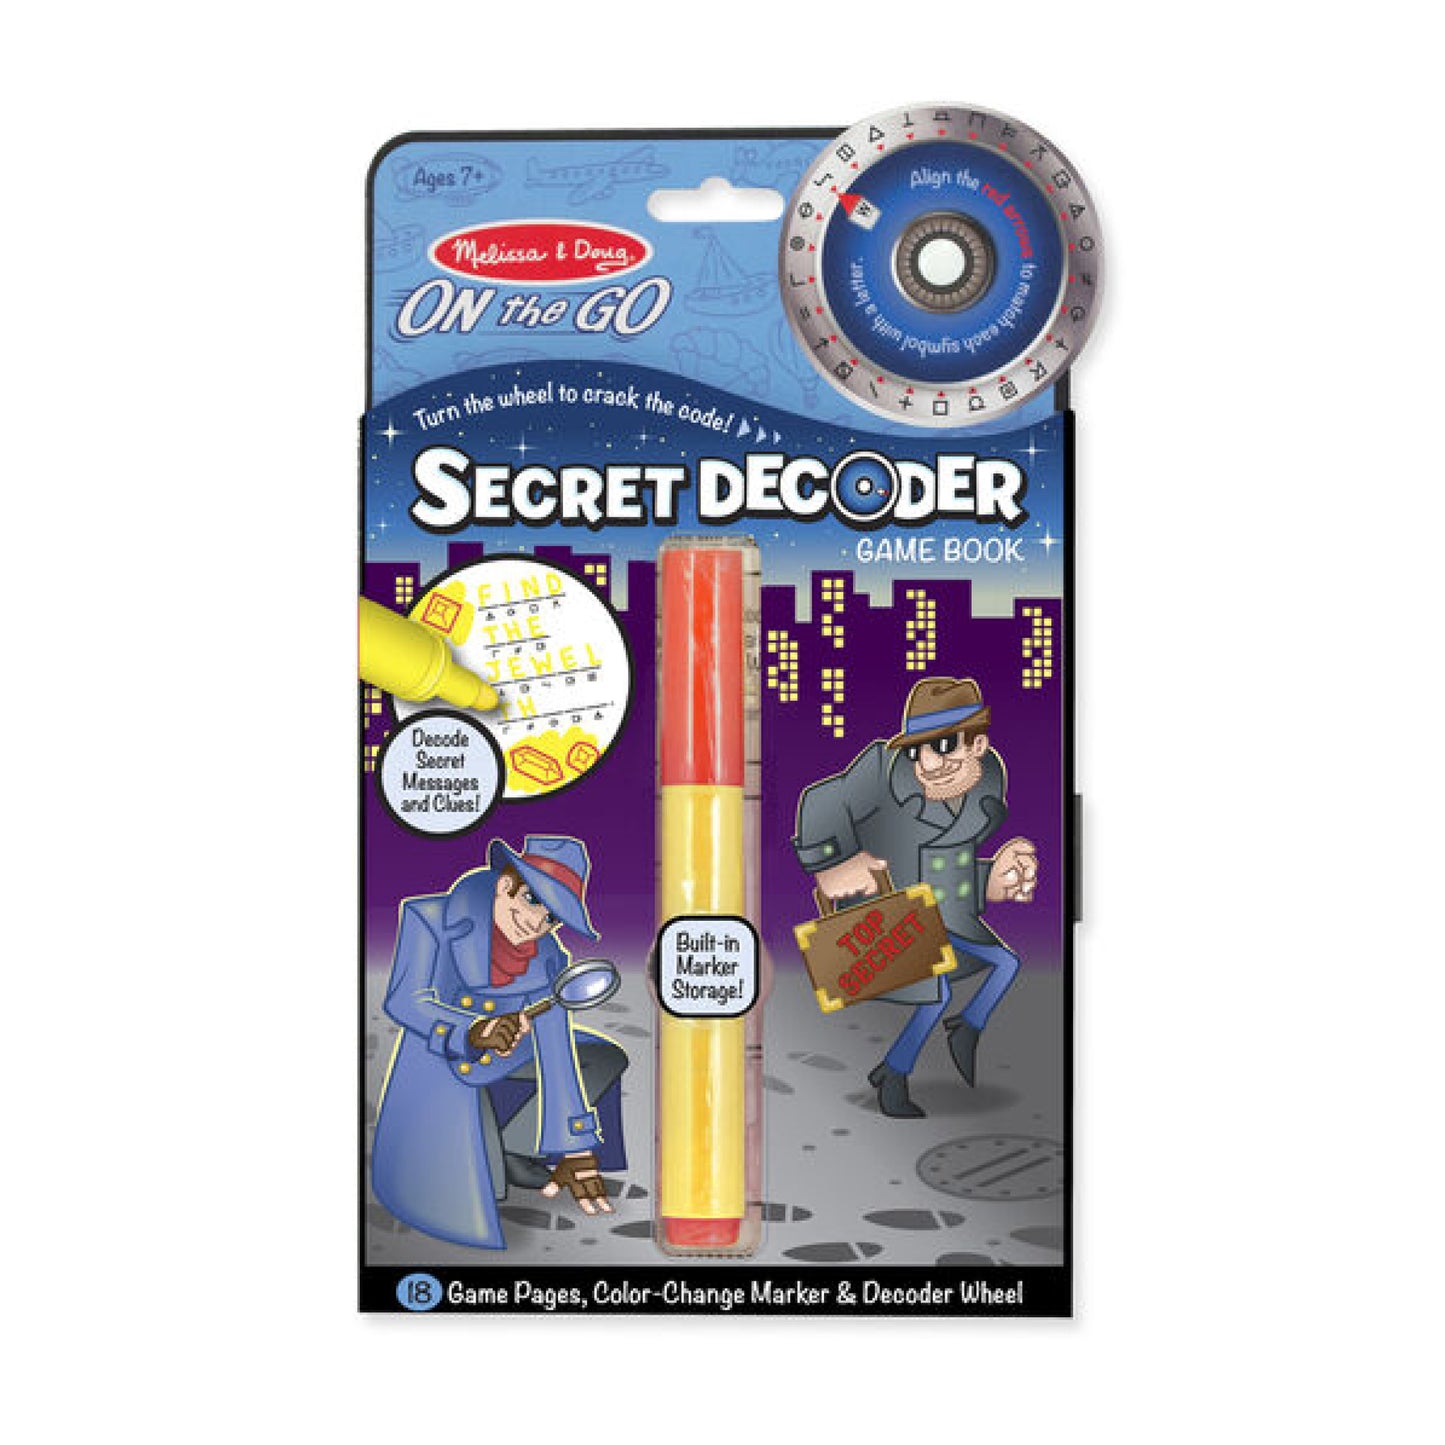 Secret Decoder Game Book - On the Go Travel Activity Book